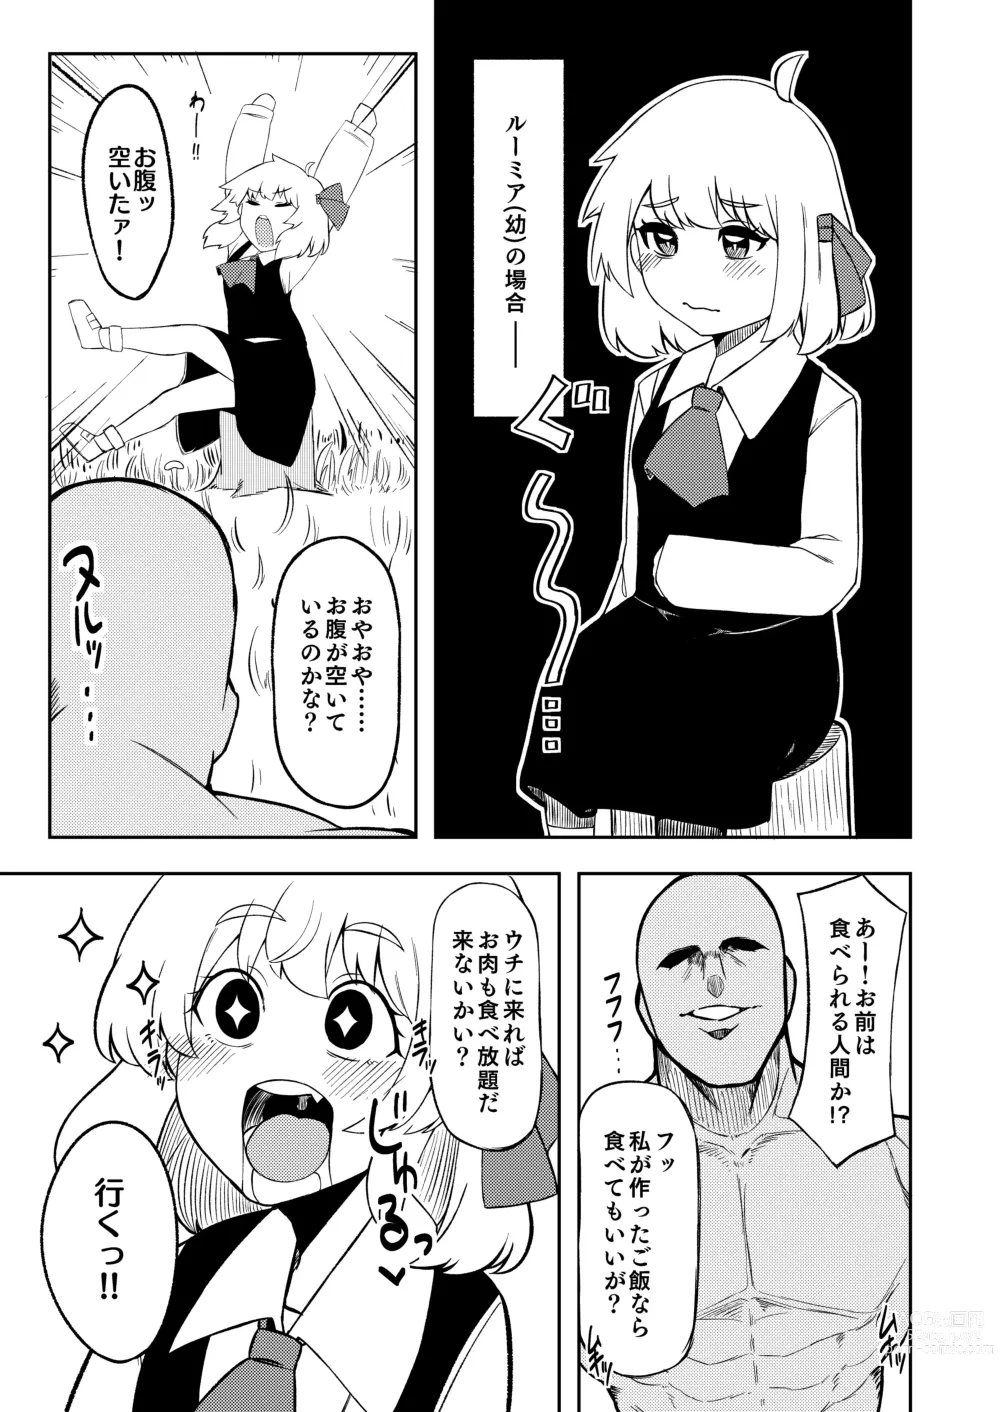 Page 4 of doujinshi Beware of Monsters at Dusk